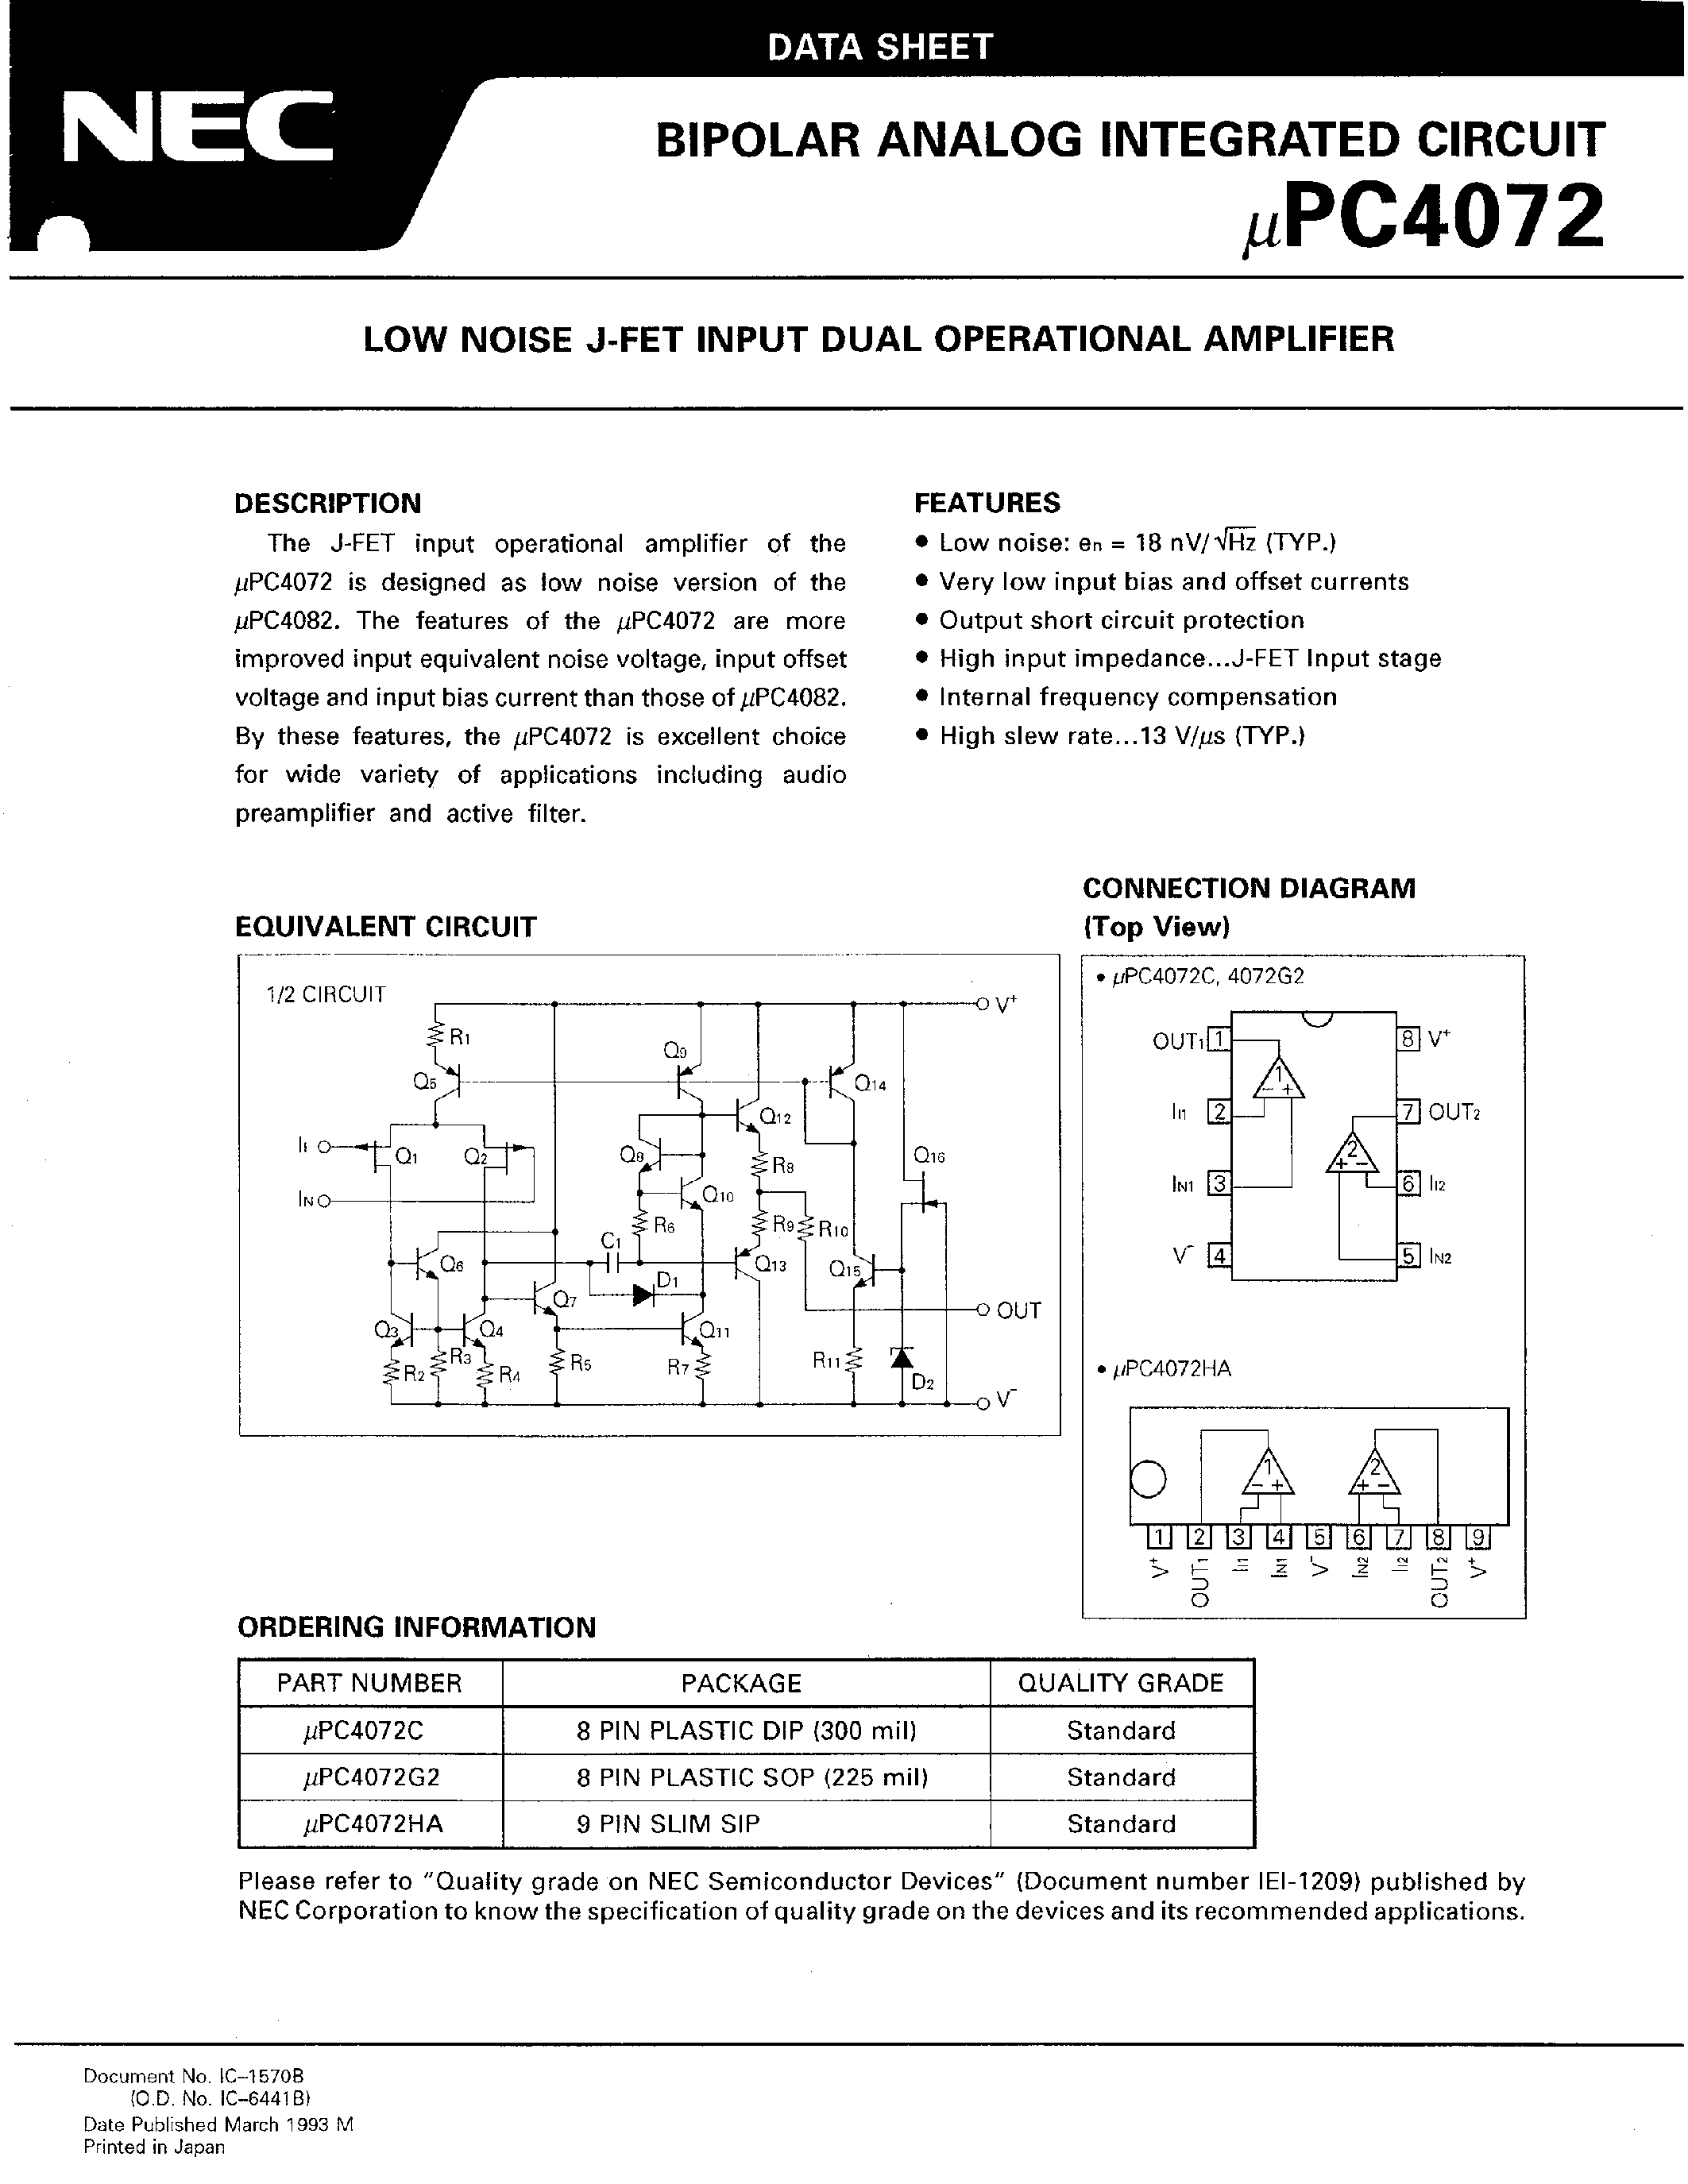 Даташит UPC4072G2 - LOW NOISE J-FET INPUT DUAL OPERATIONAL AMPLIFIER страница 1